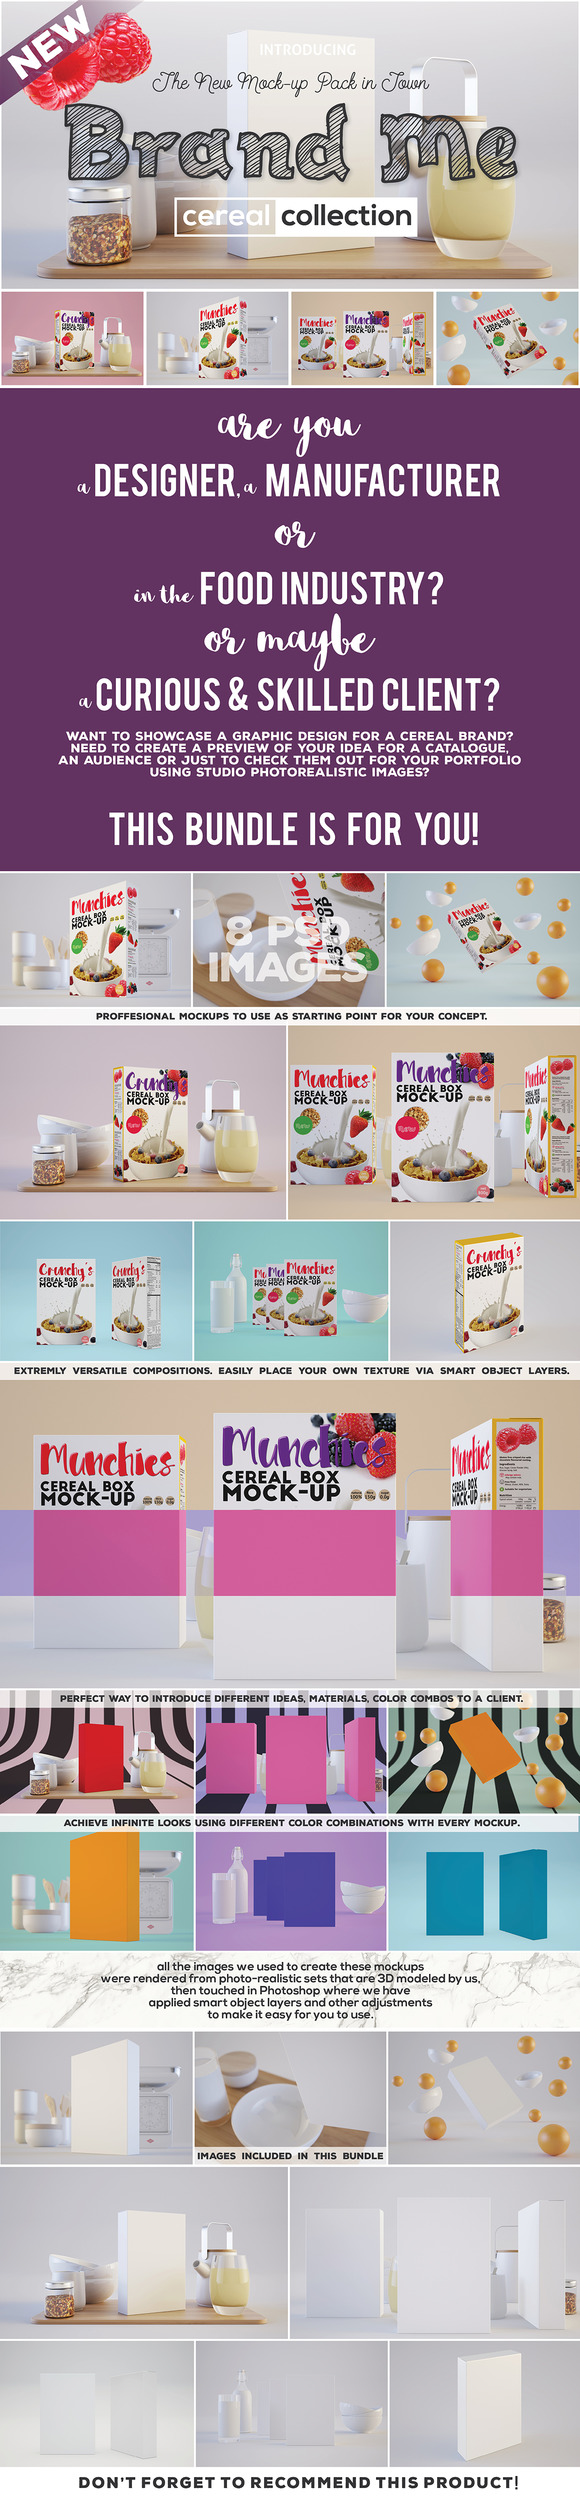 Download Cereal Box Free Mockup » Designtube - Creative Design Content